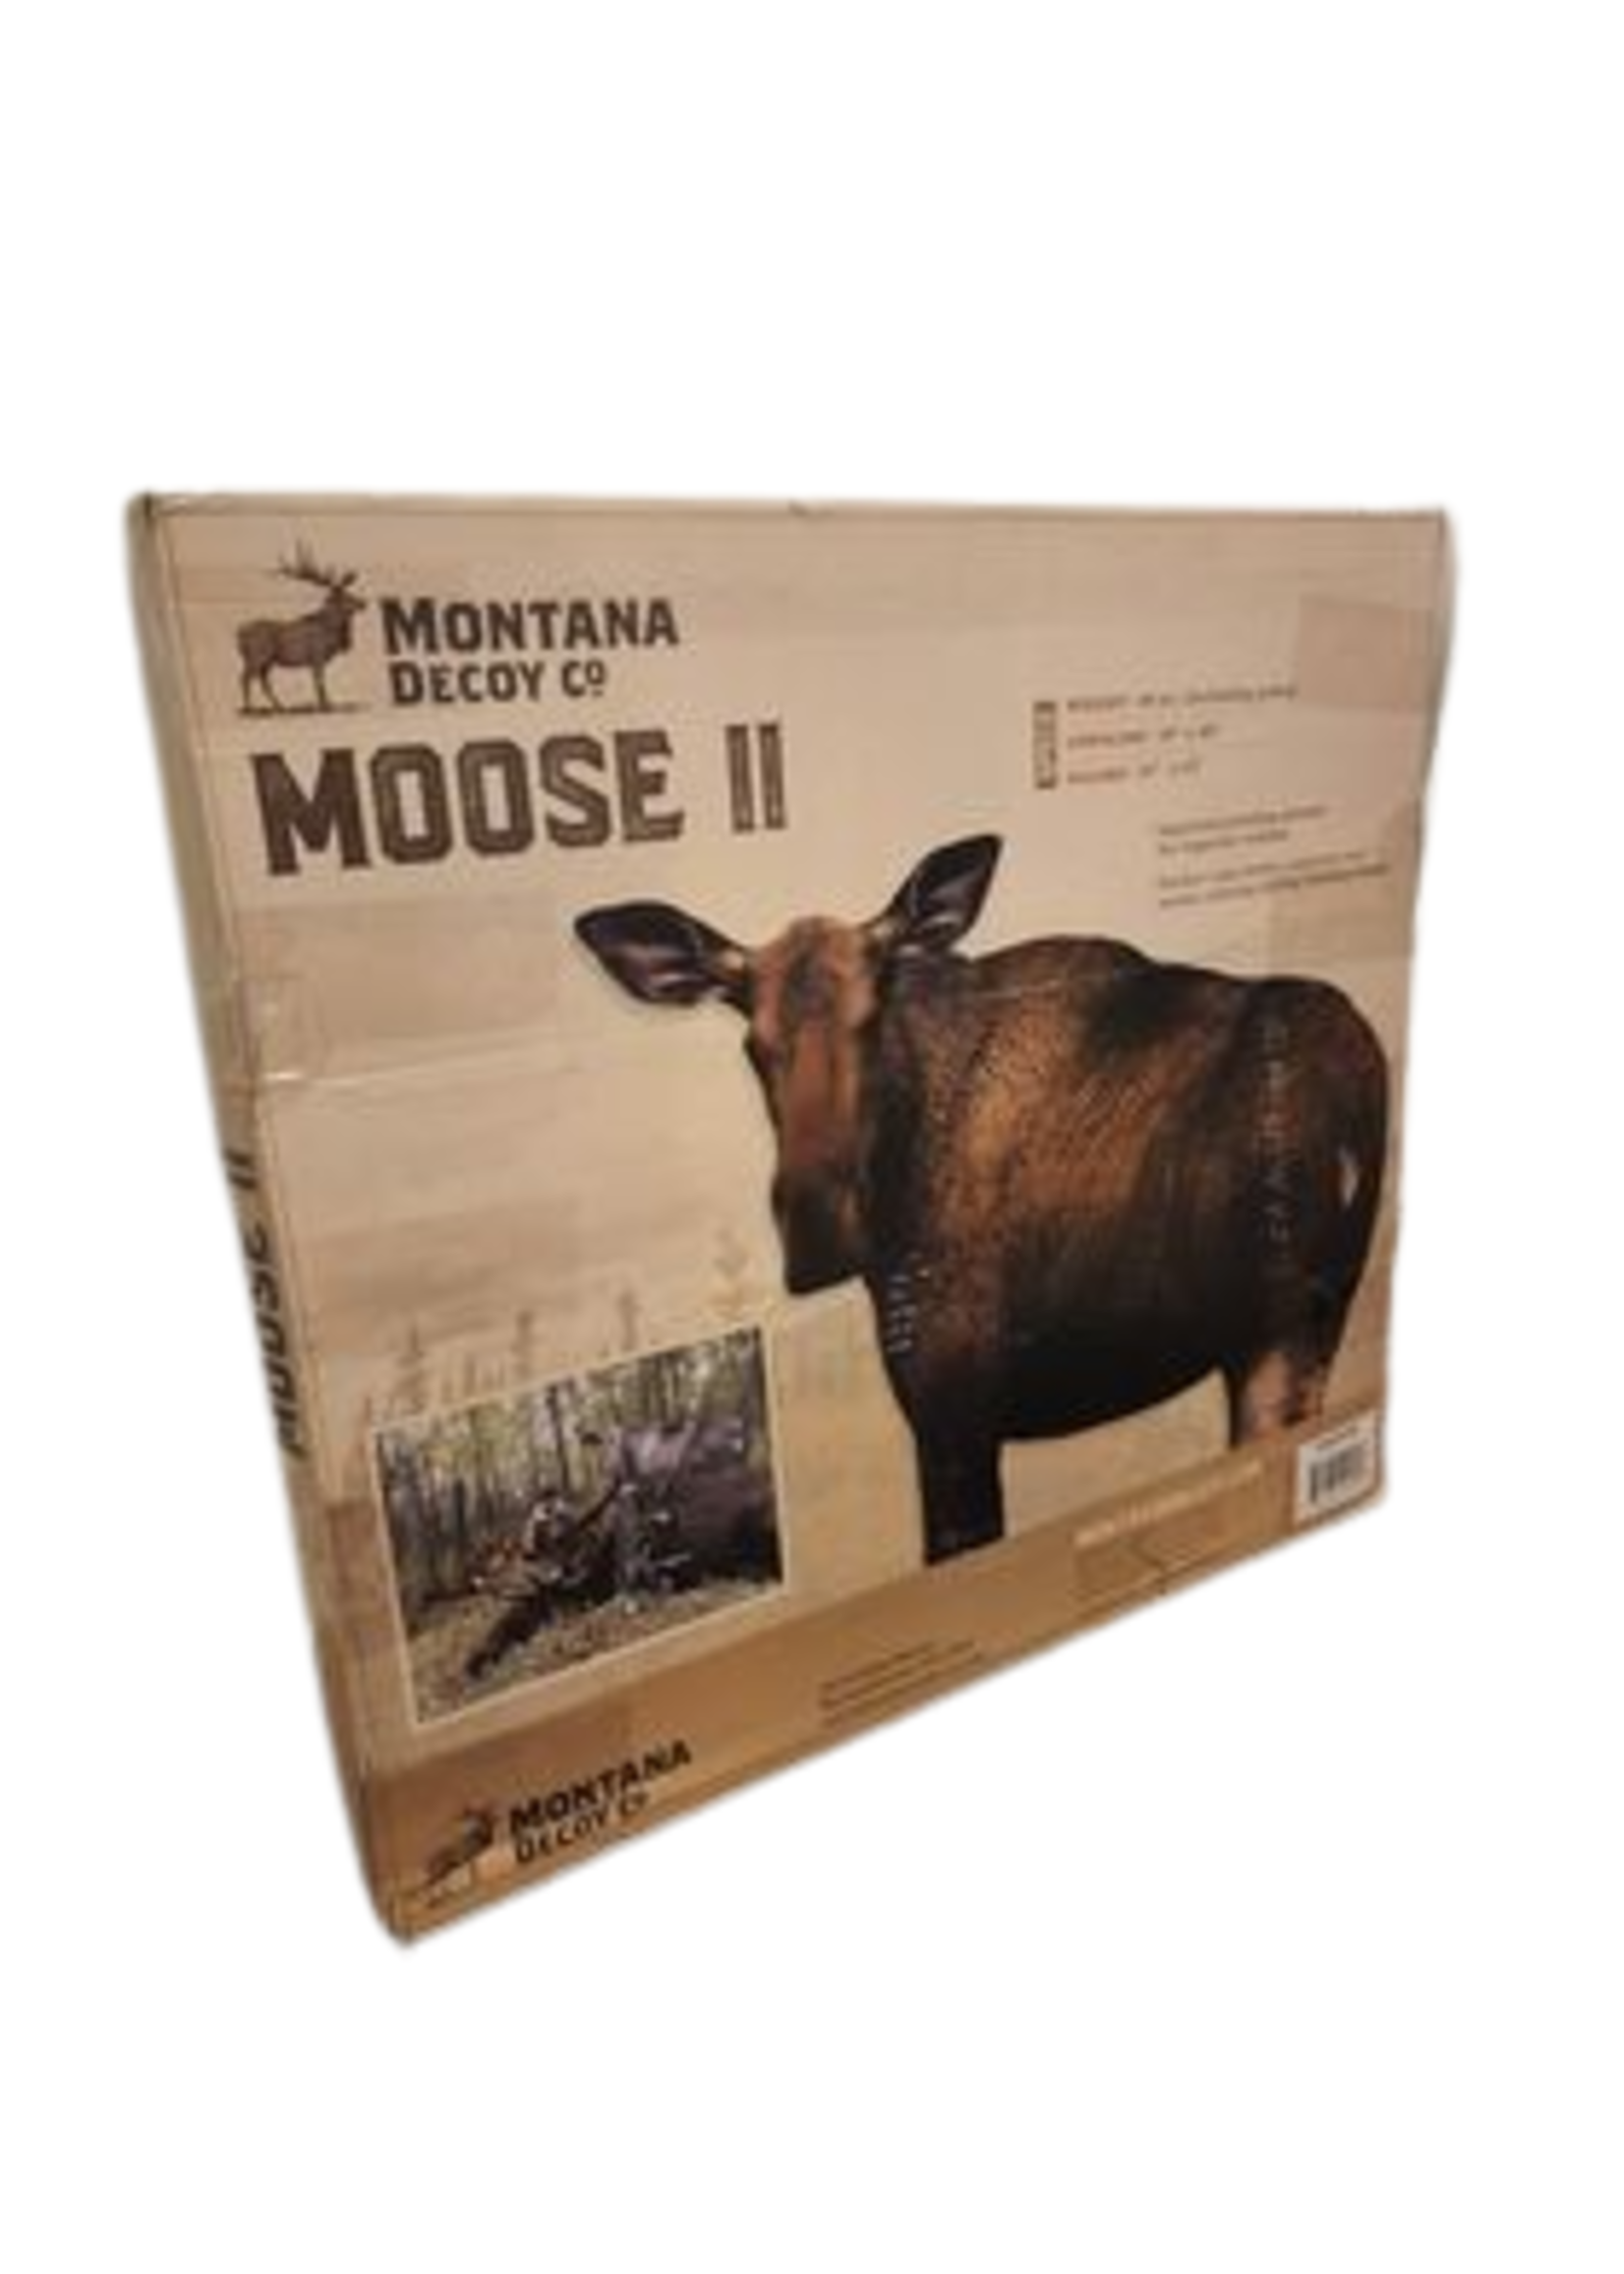 Montana Decoy Co. Appelant d'orignal Moose II Decoy